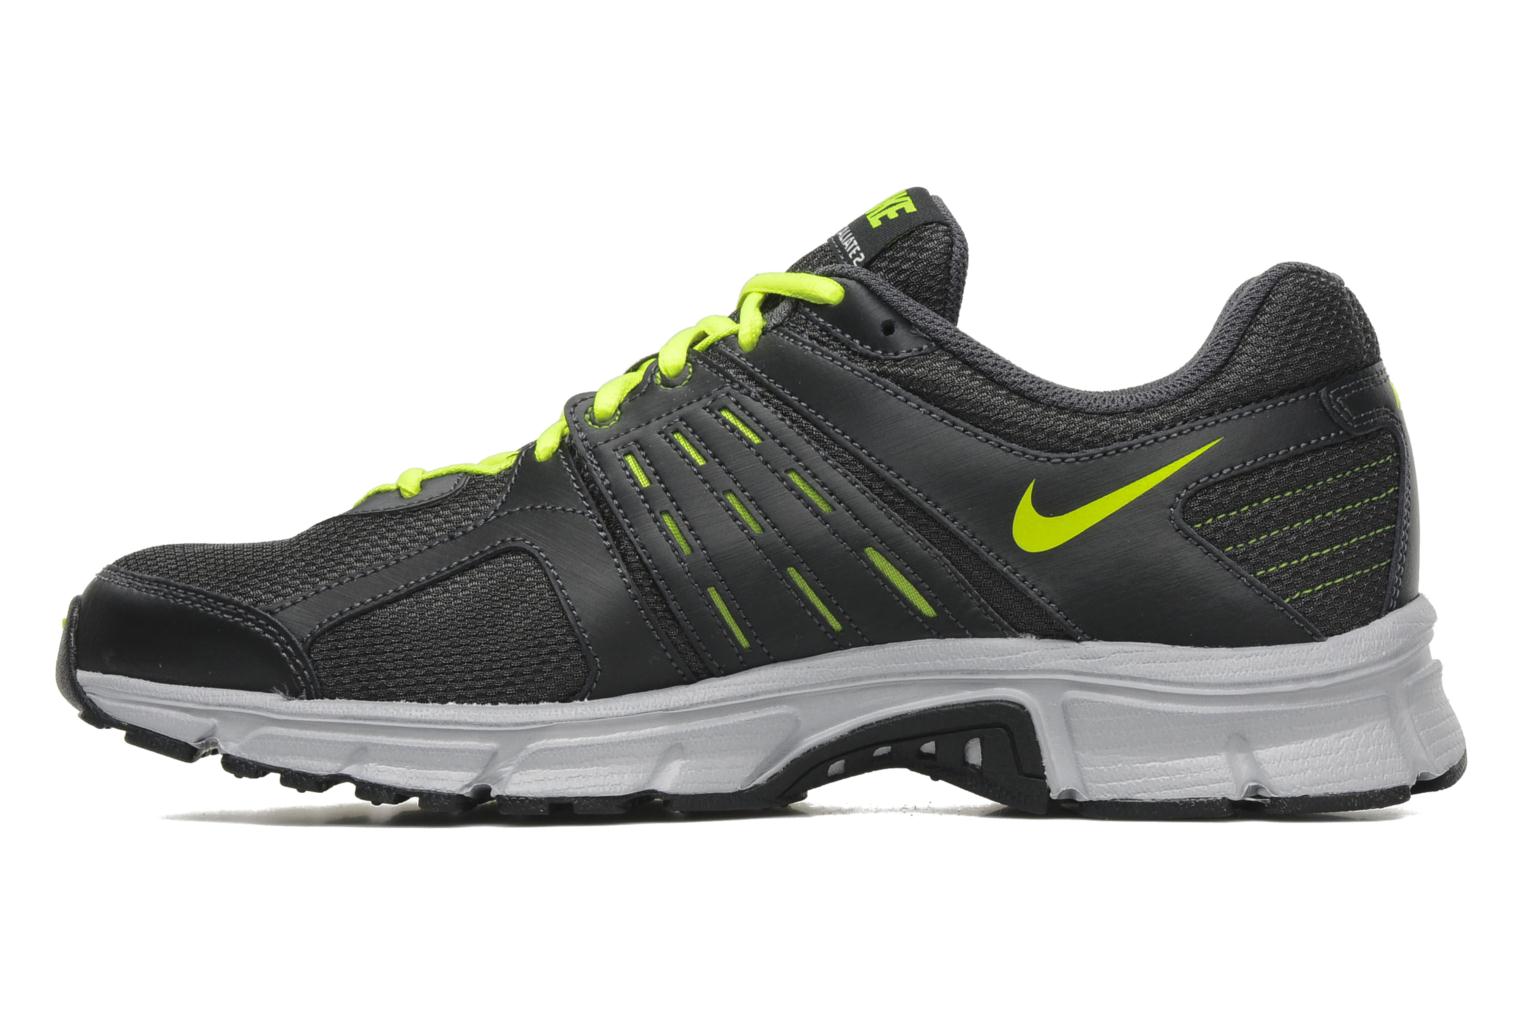 Nike Air Retaliate 2 Sport shoes in Grey at Sarenza.co.uk (132631)